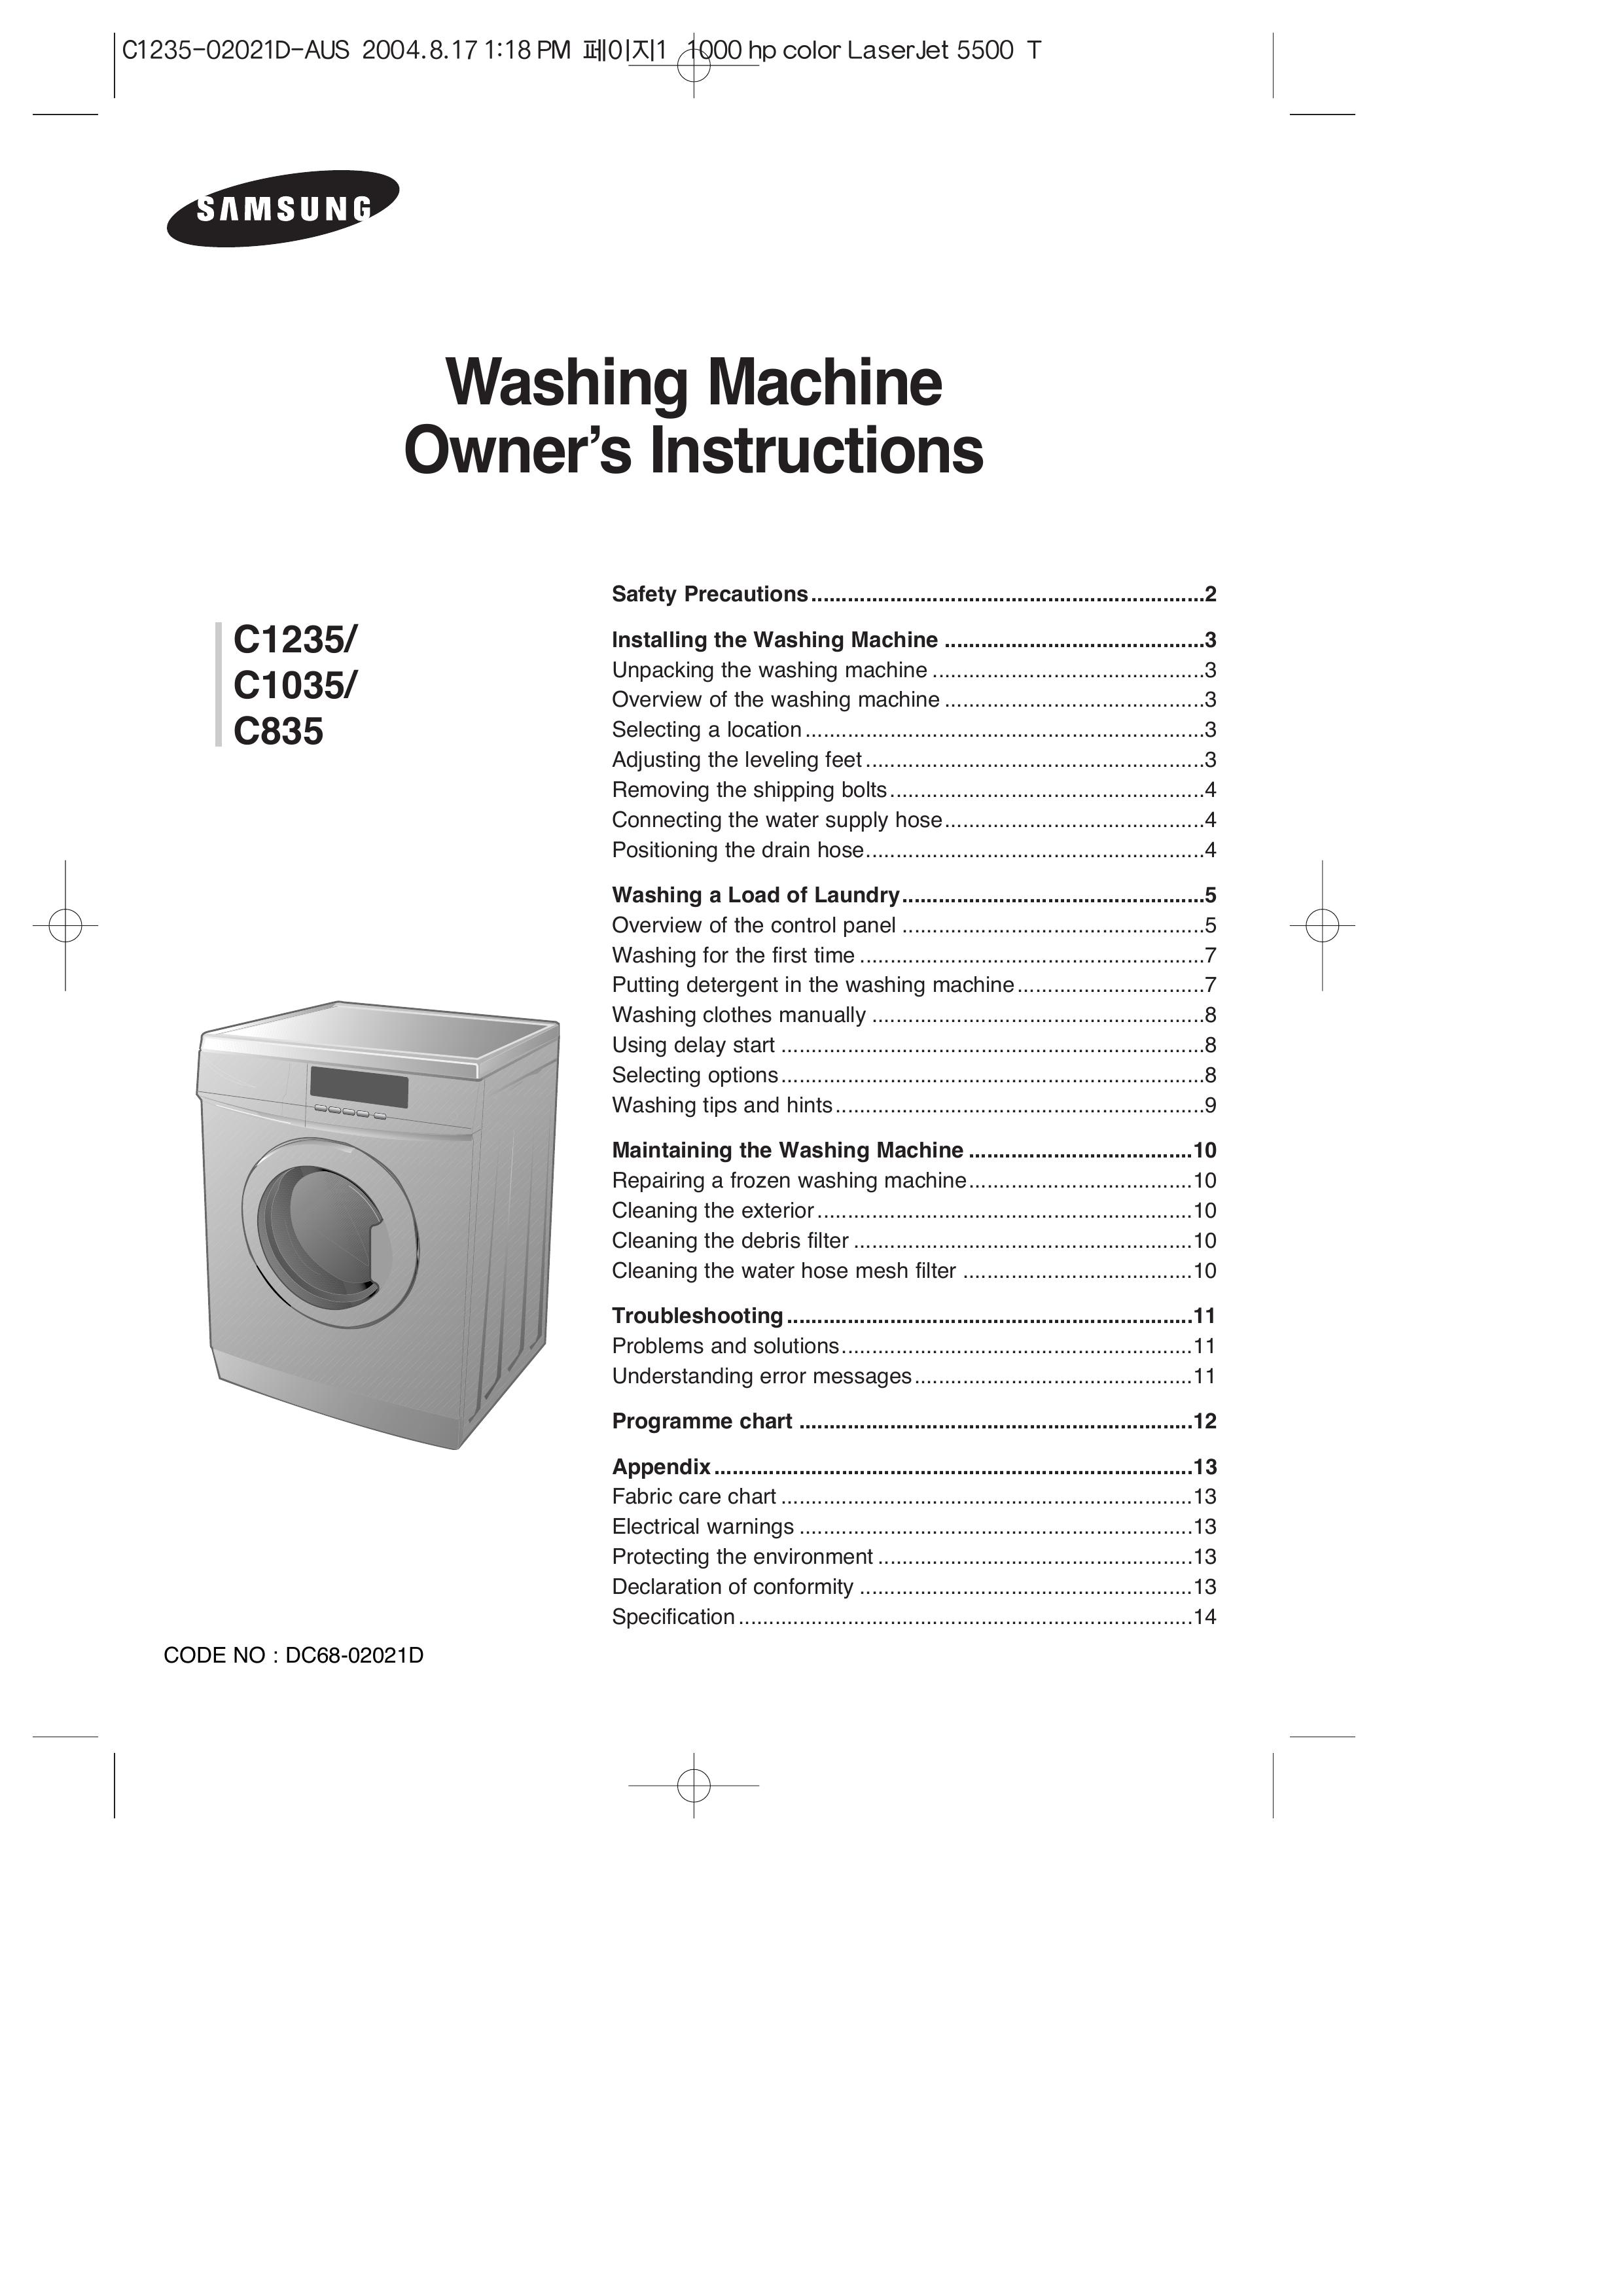 Samsung C1035 Washer User Manual